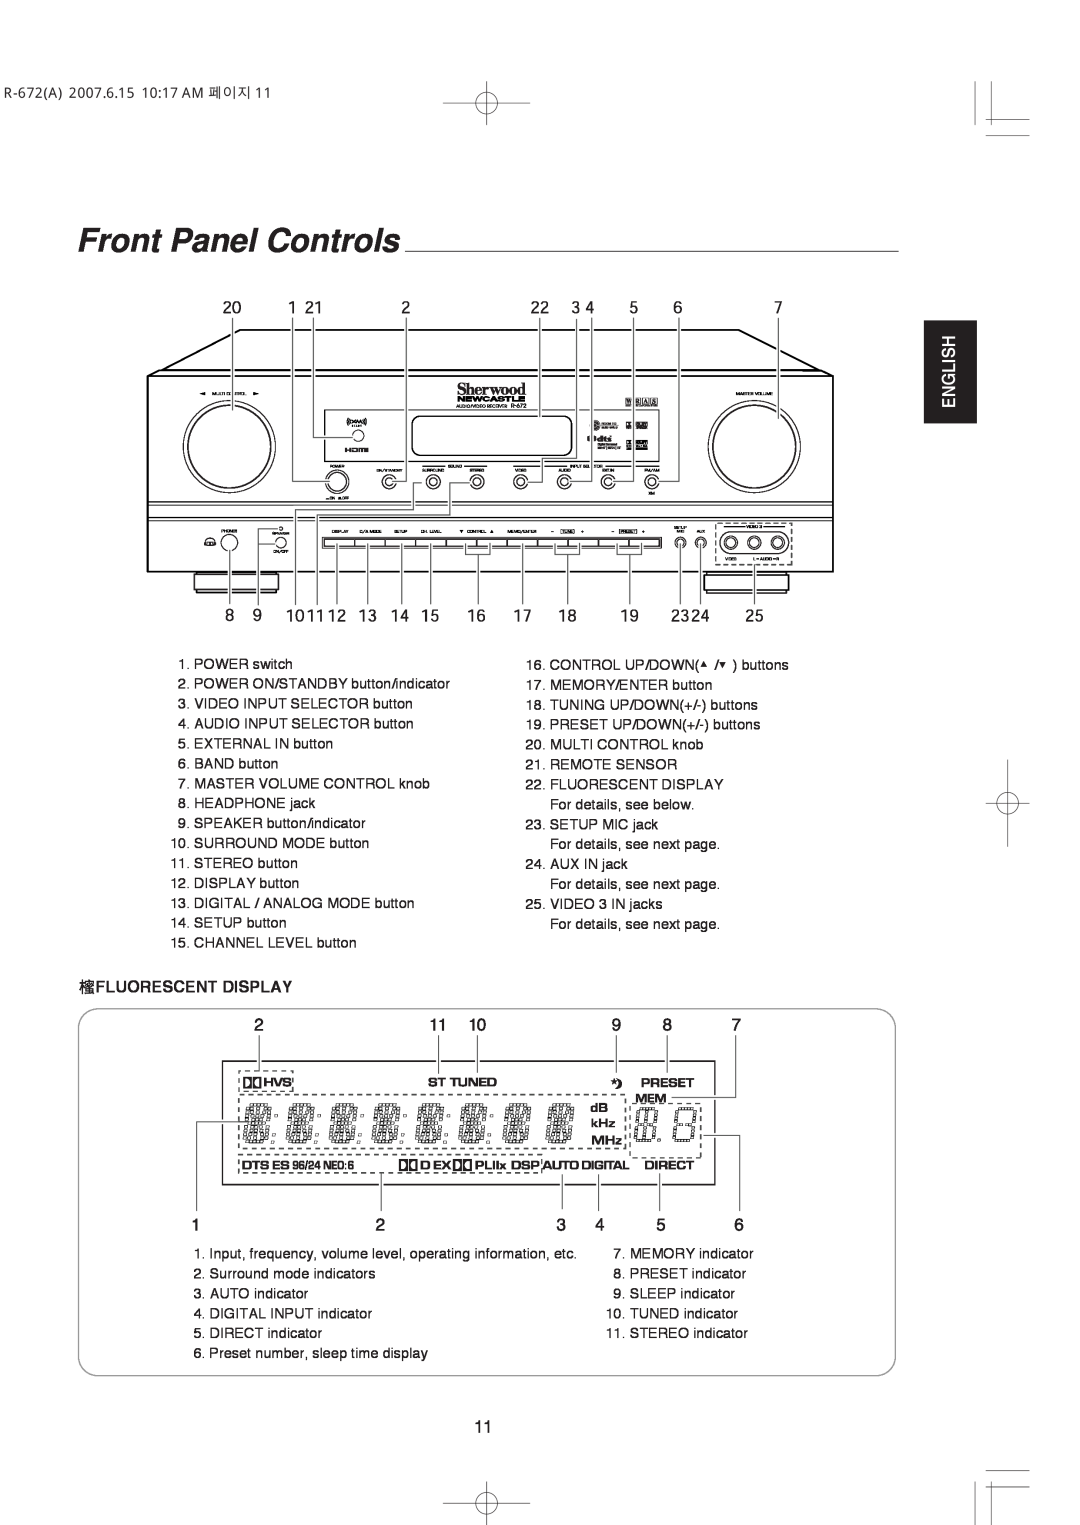 XM Satellite Radio manual Front Panel Controls, Fluorescent Display, English, R-672A2007.6.15 10 17 AM 페이지 